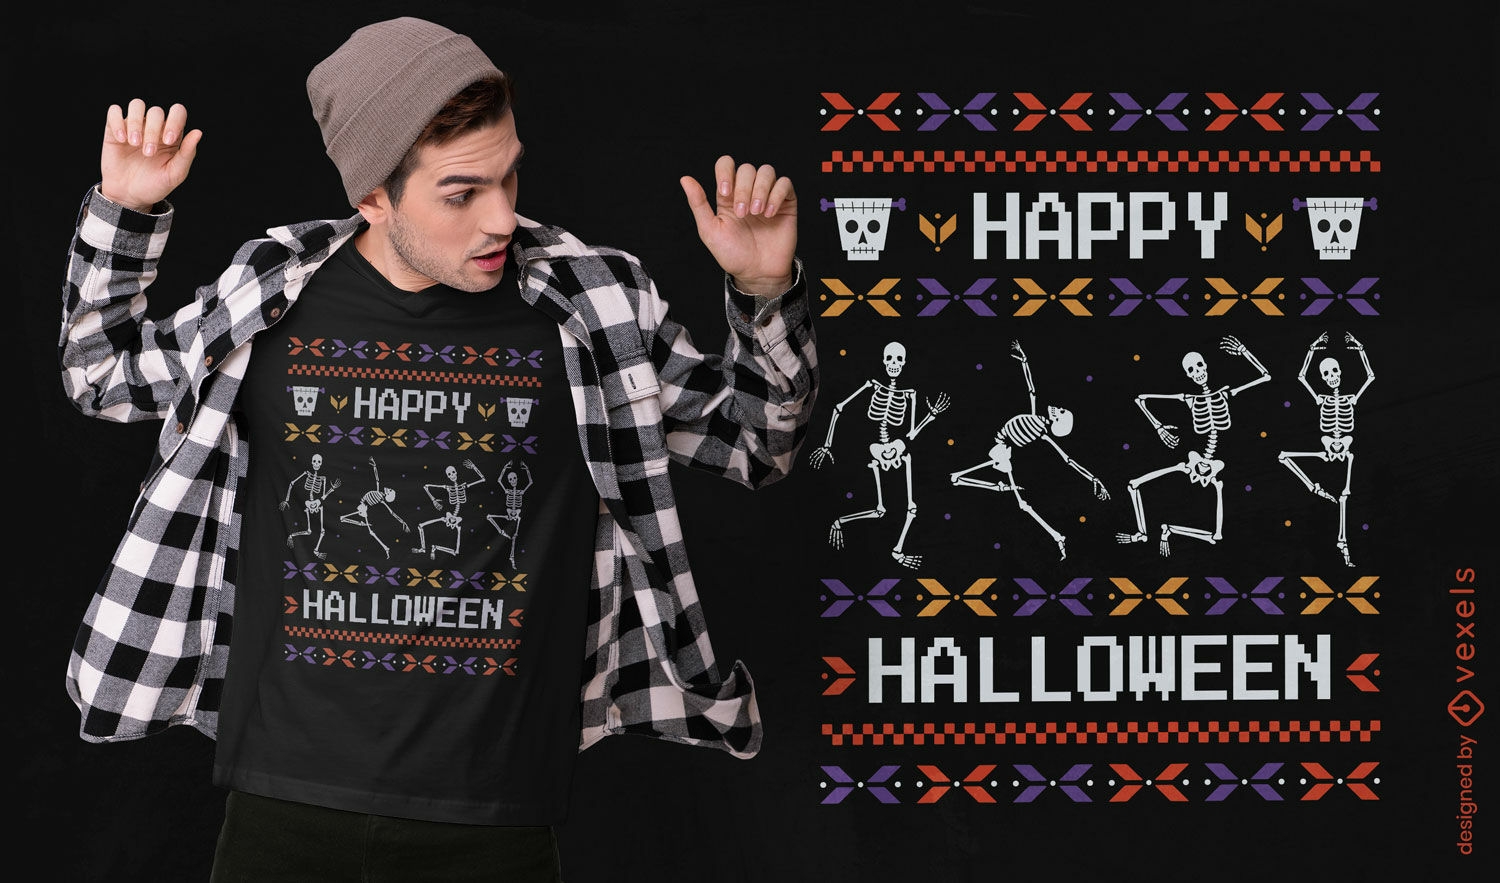 Dancing skeleton Halloween t-shirt design